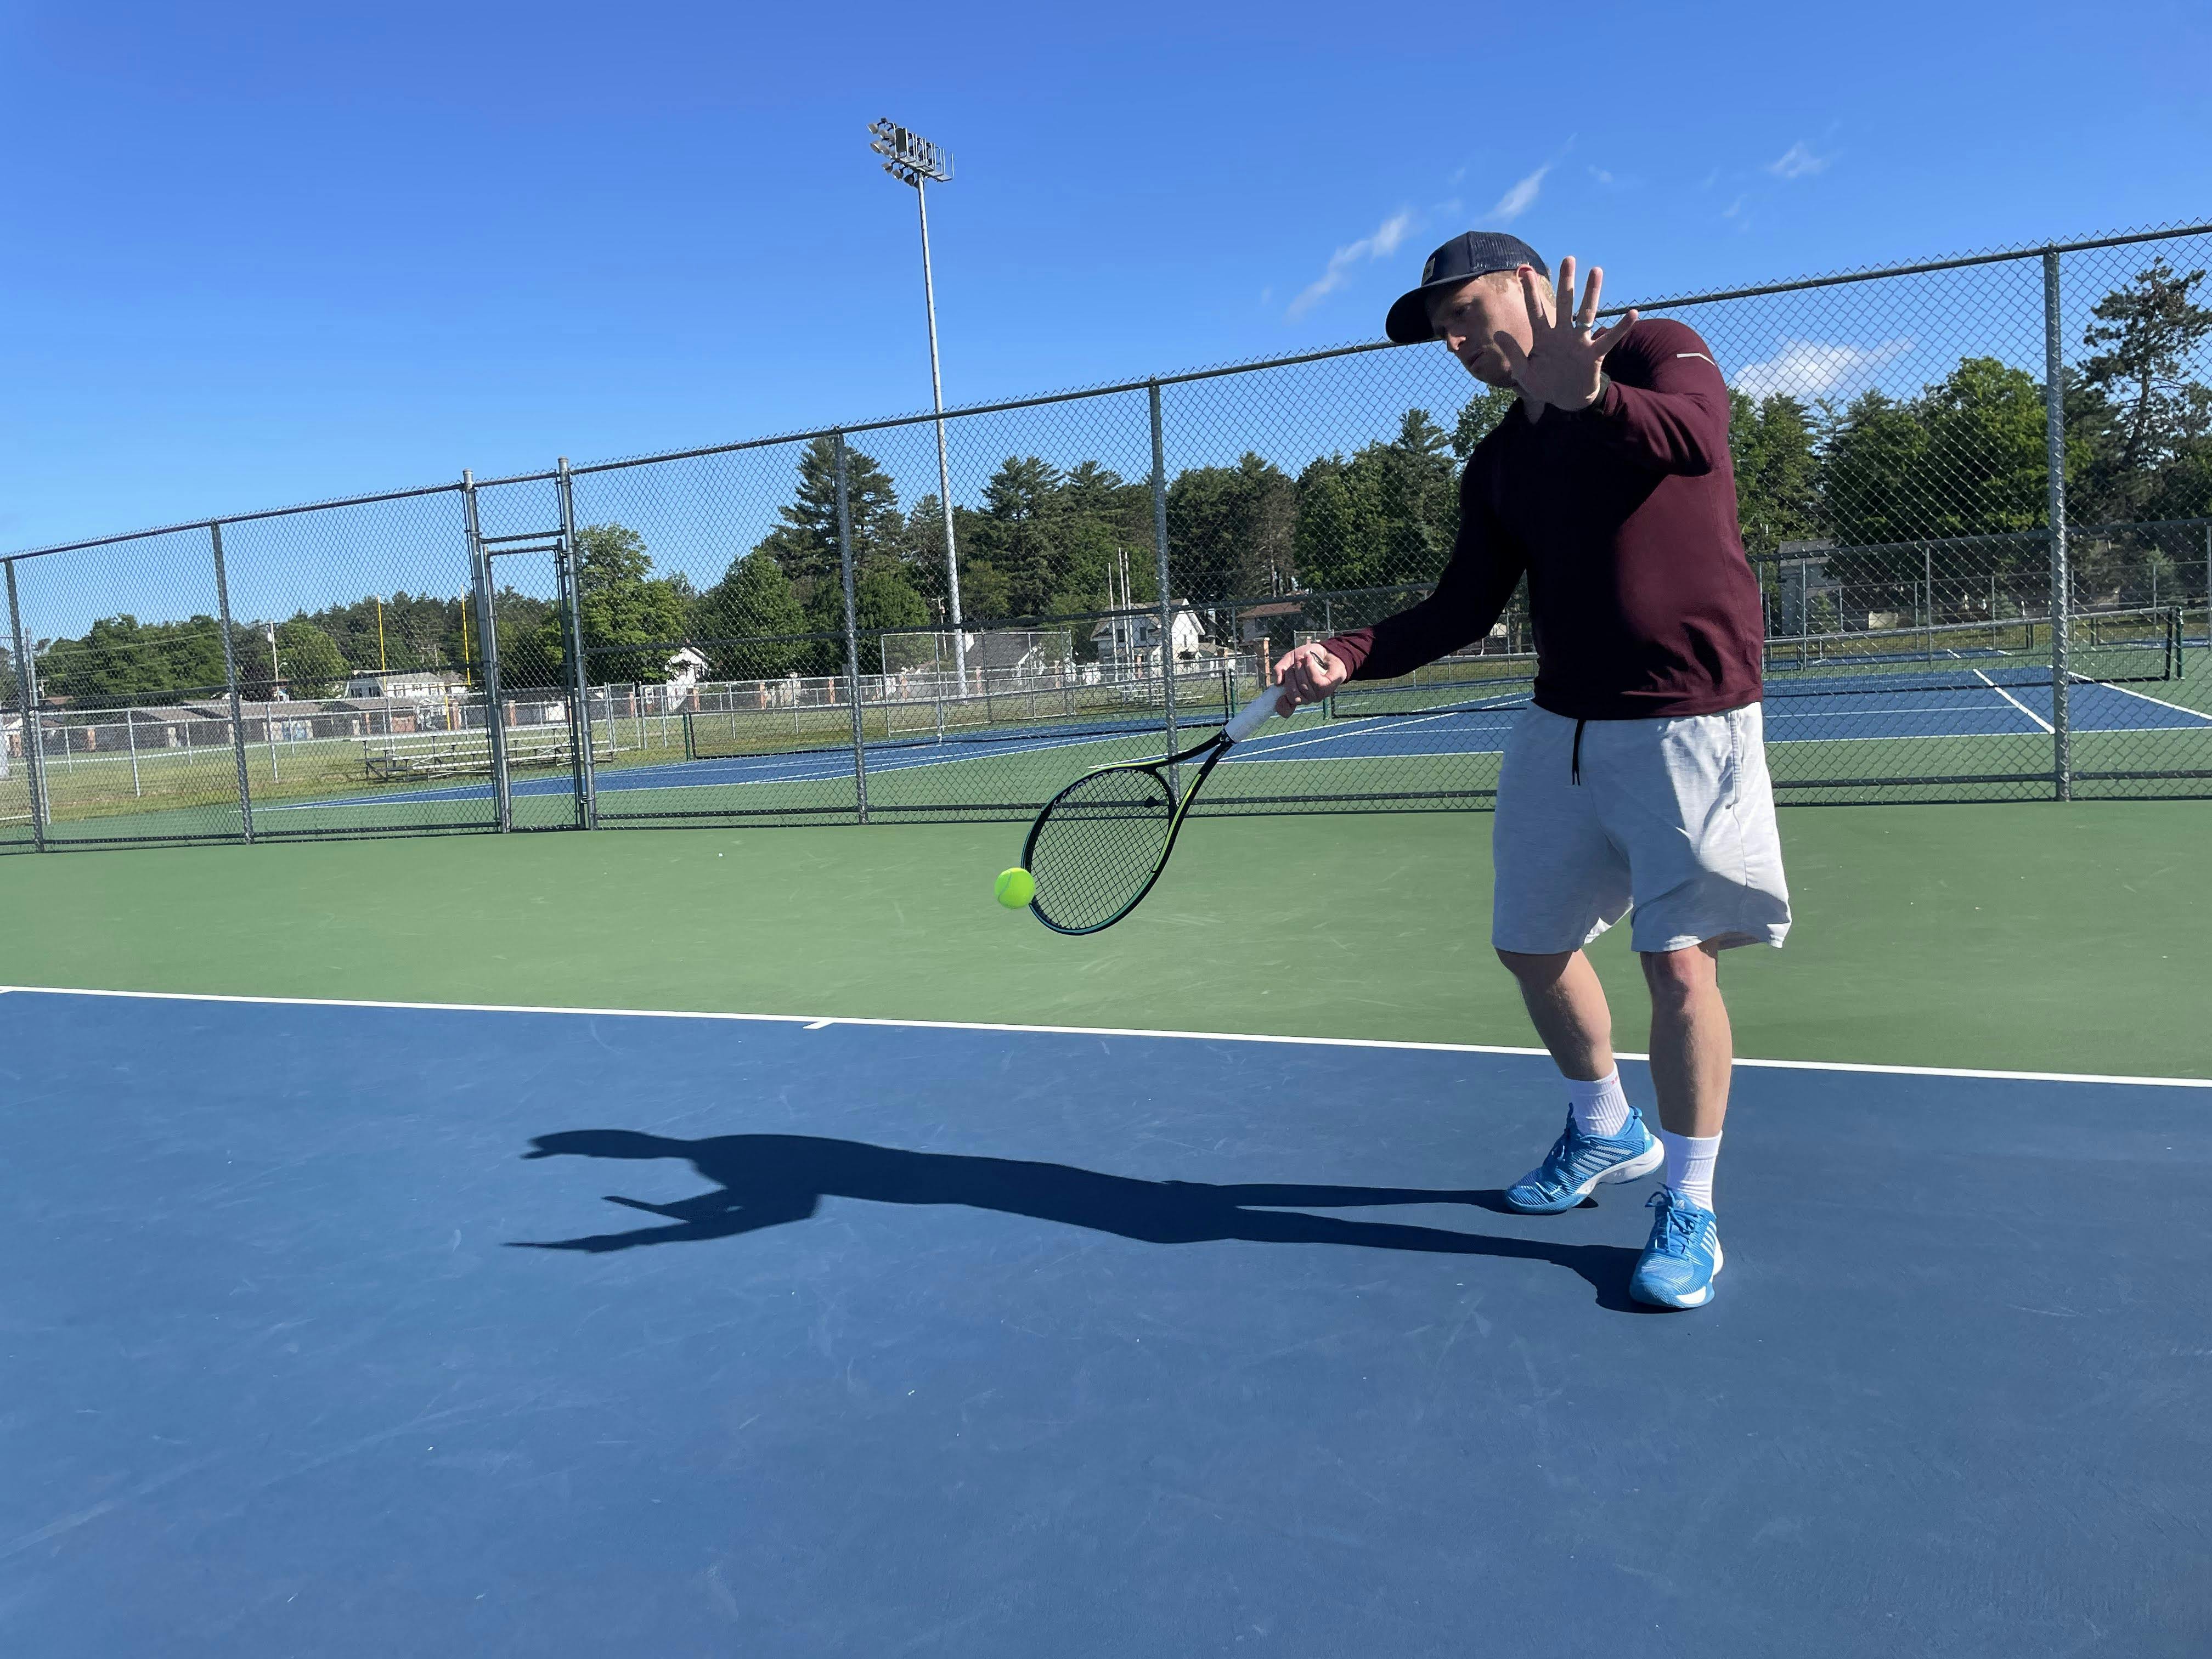 An expert playing tennis with Head Gravity MP Racquet.